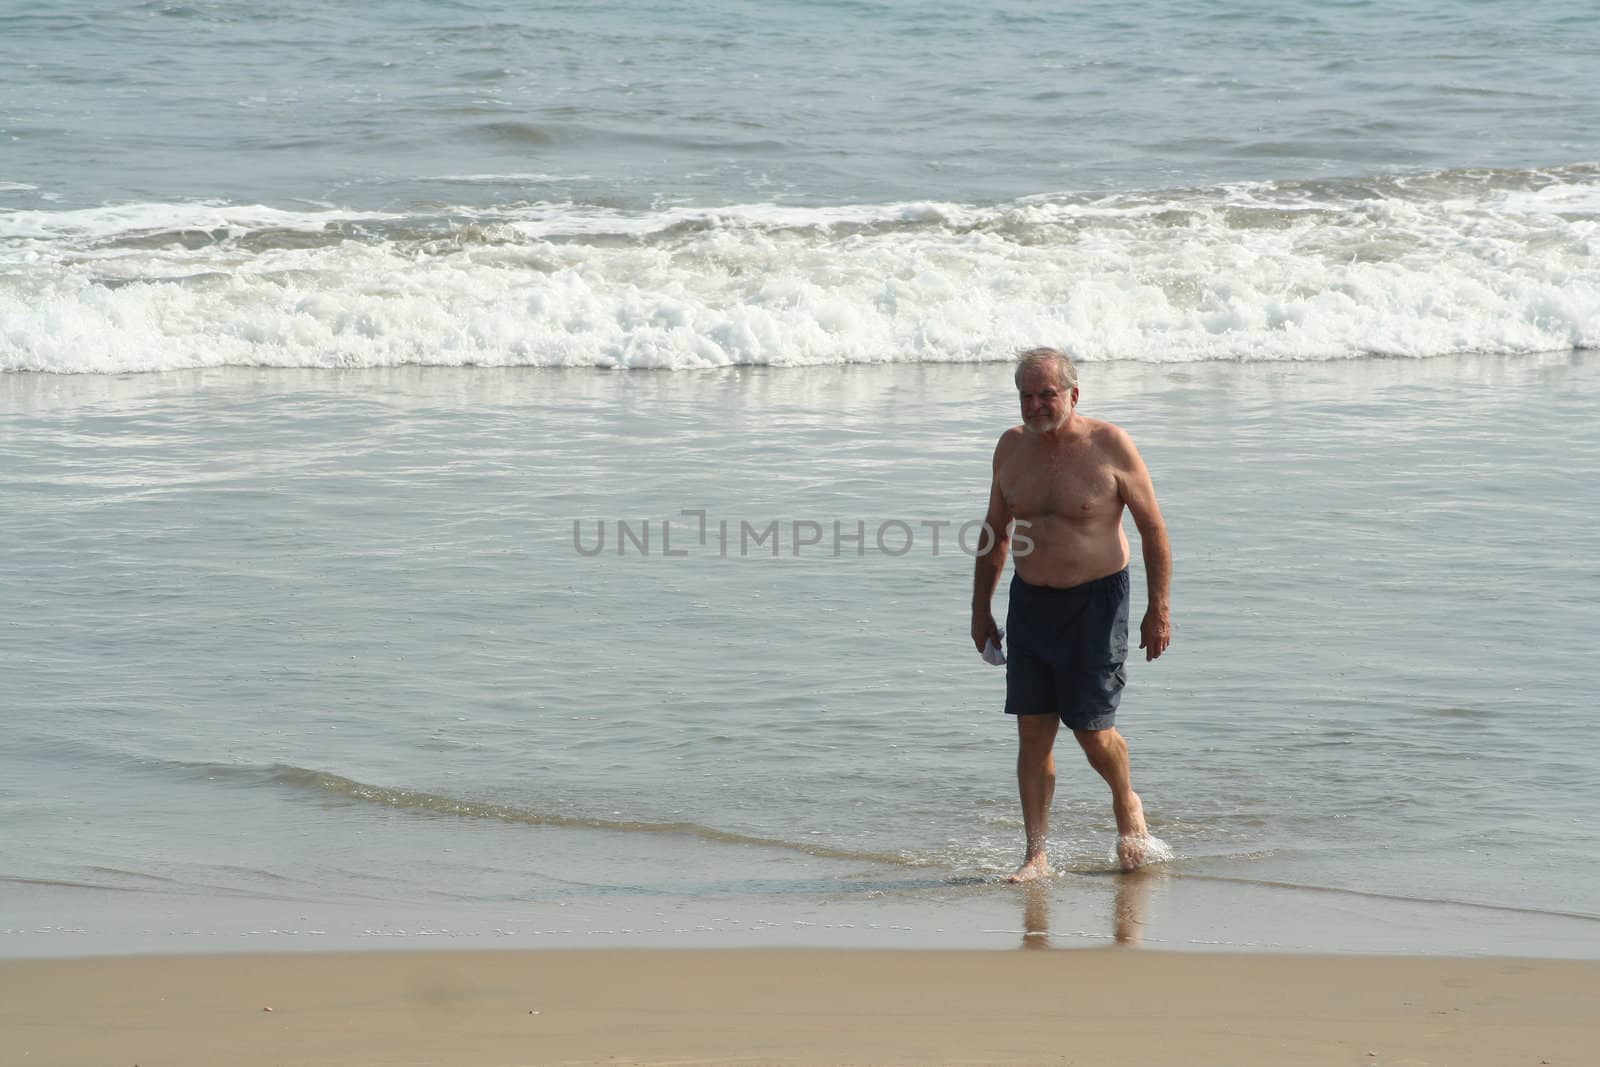 Elderly man walking on beach in the waves